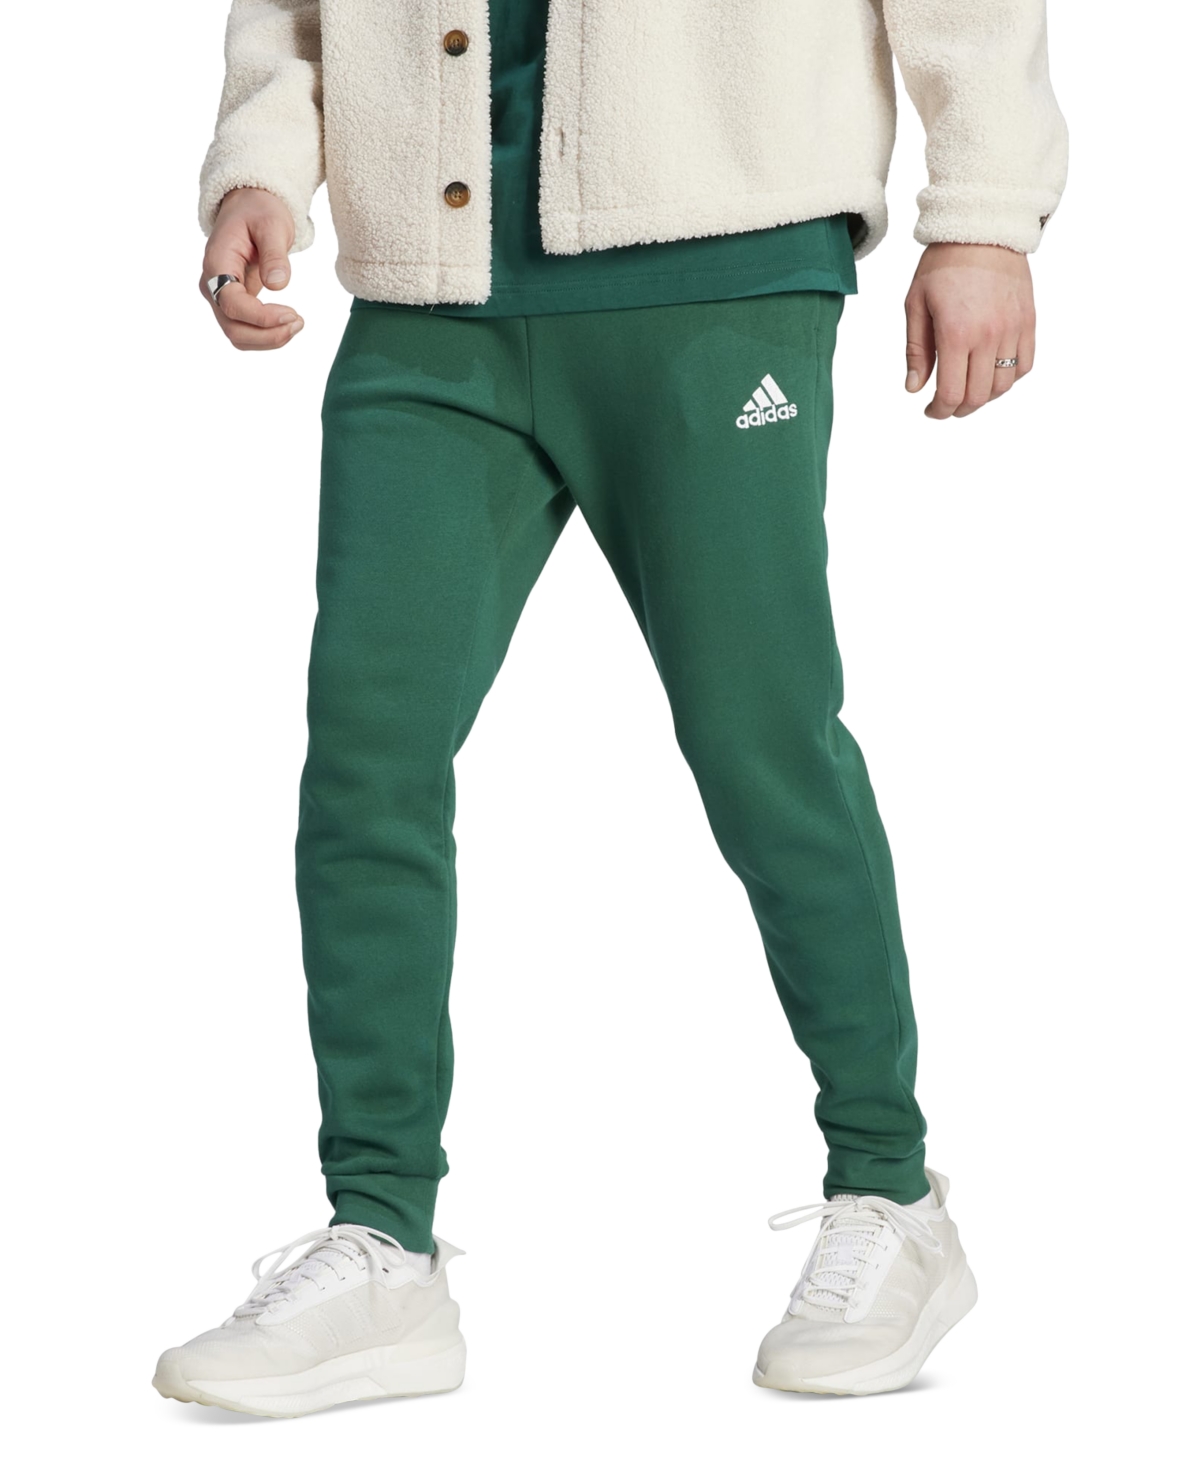 Adidas Originals Men's Cozy Fleece Tapered Leg Mid-rise Jogger Pants In College Green